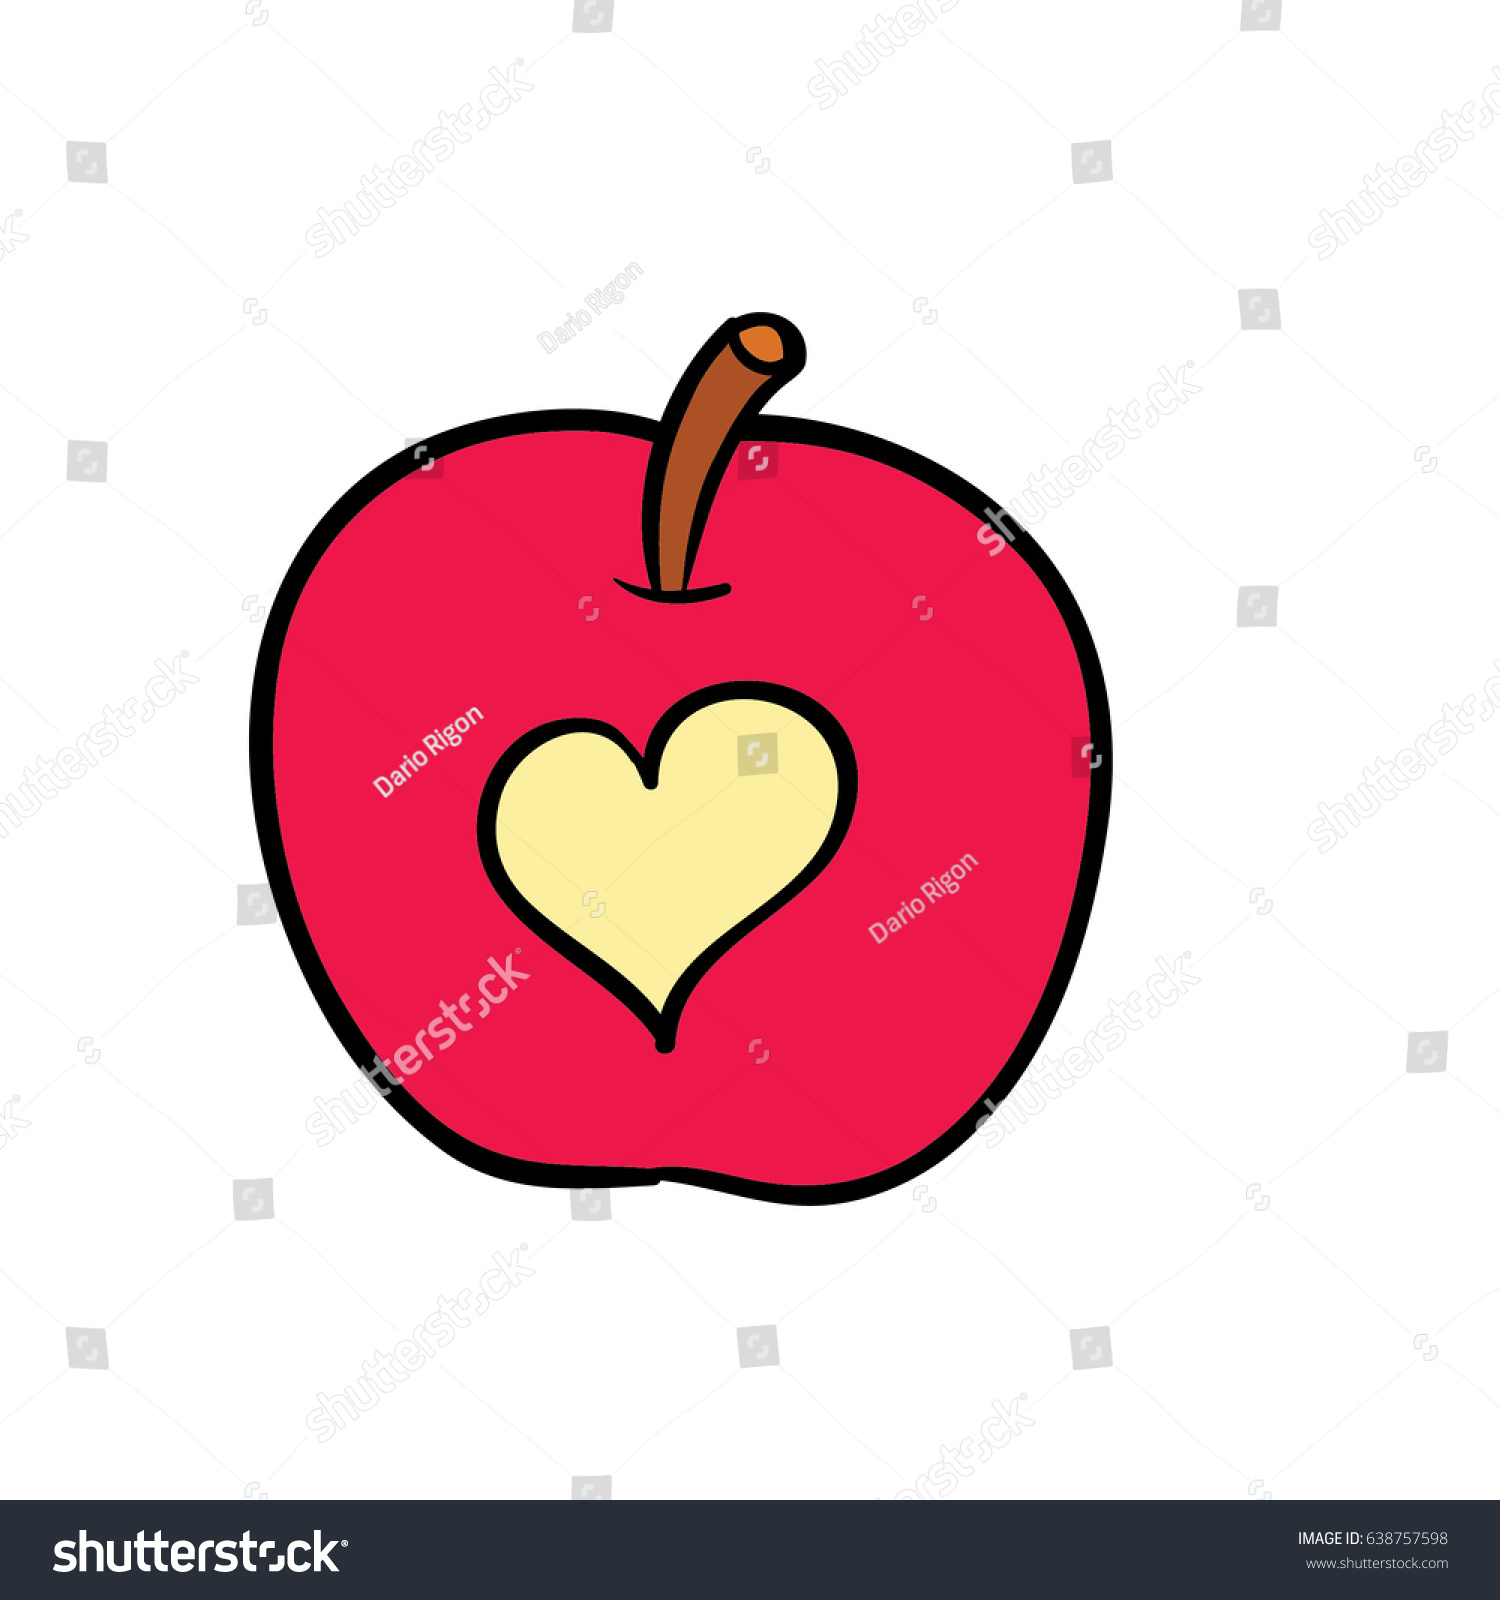 Colored Apple Illustration Heart Bite Stock Vector 638757598 ...